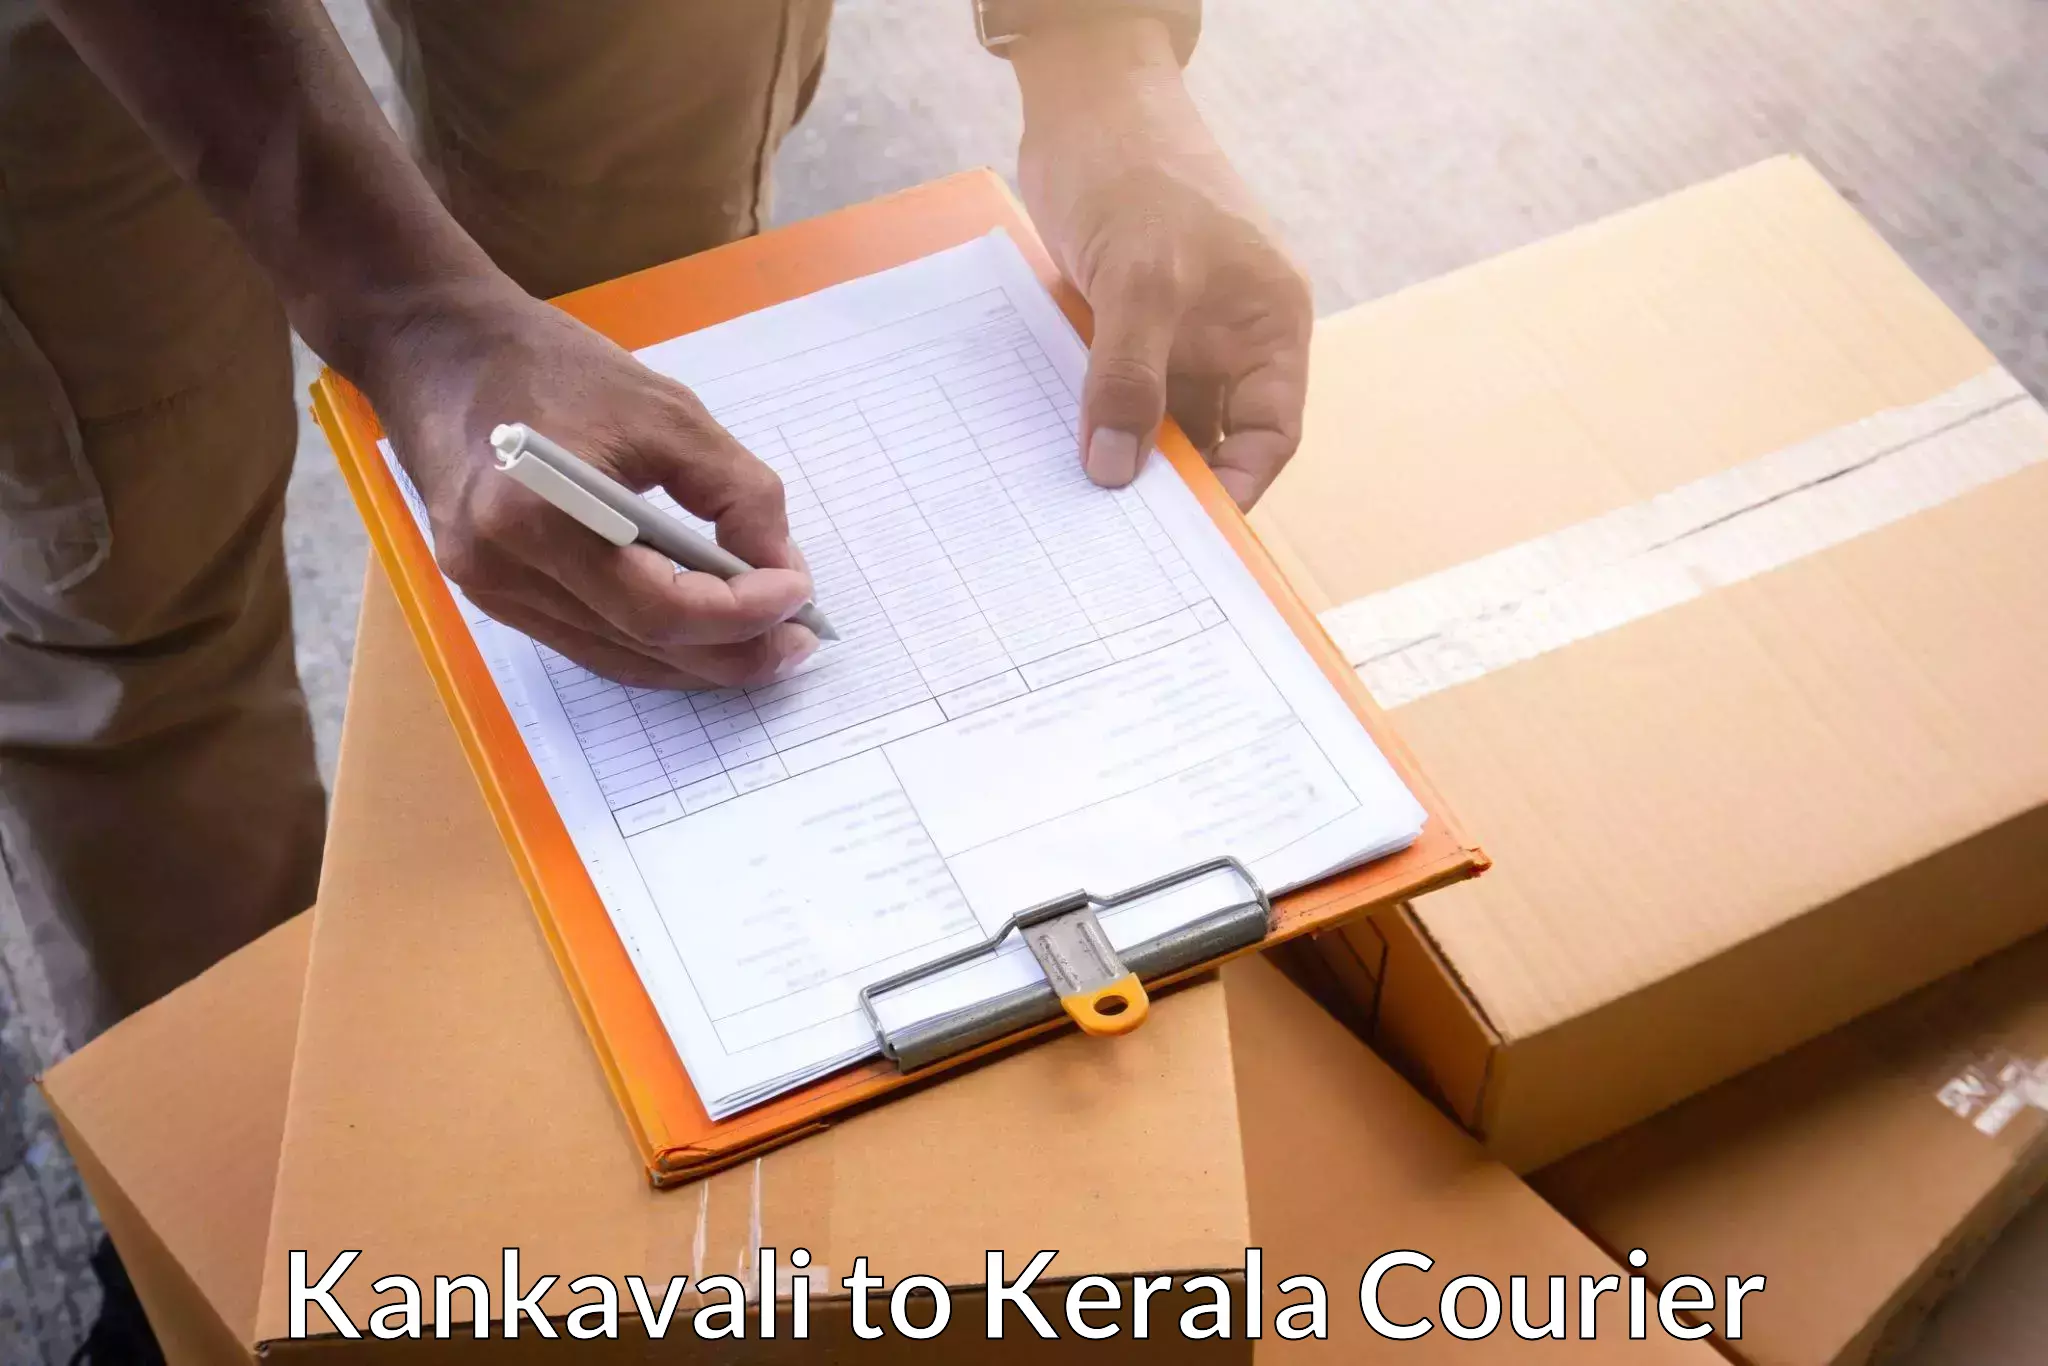 International courier networks Kankavali to Kerala